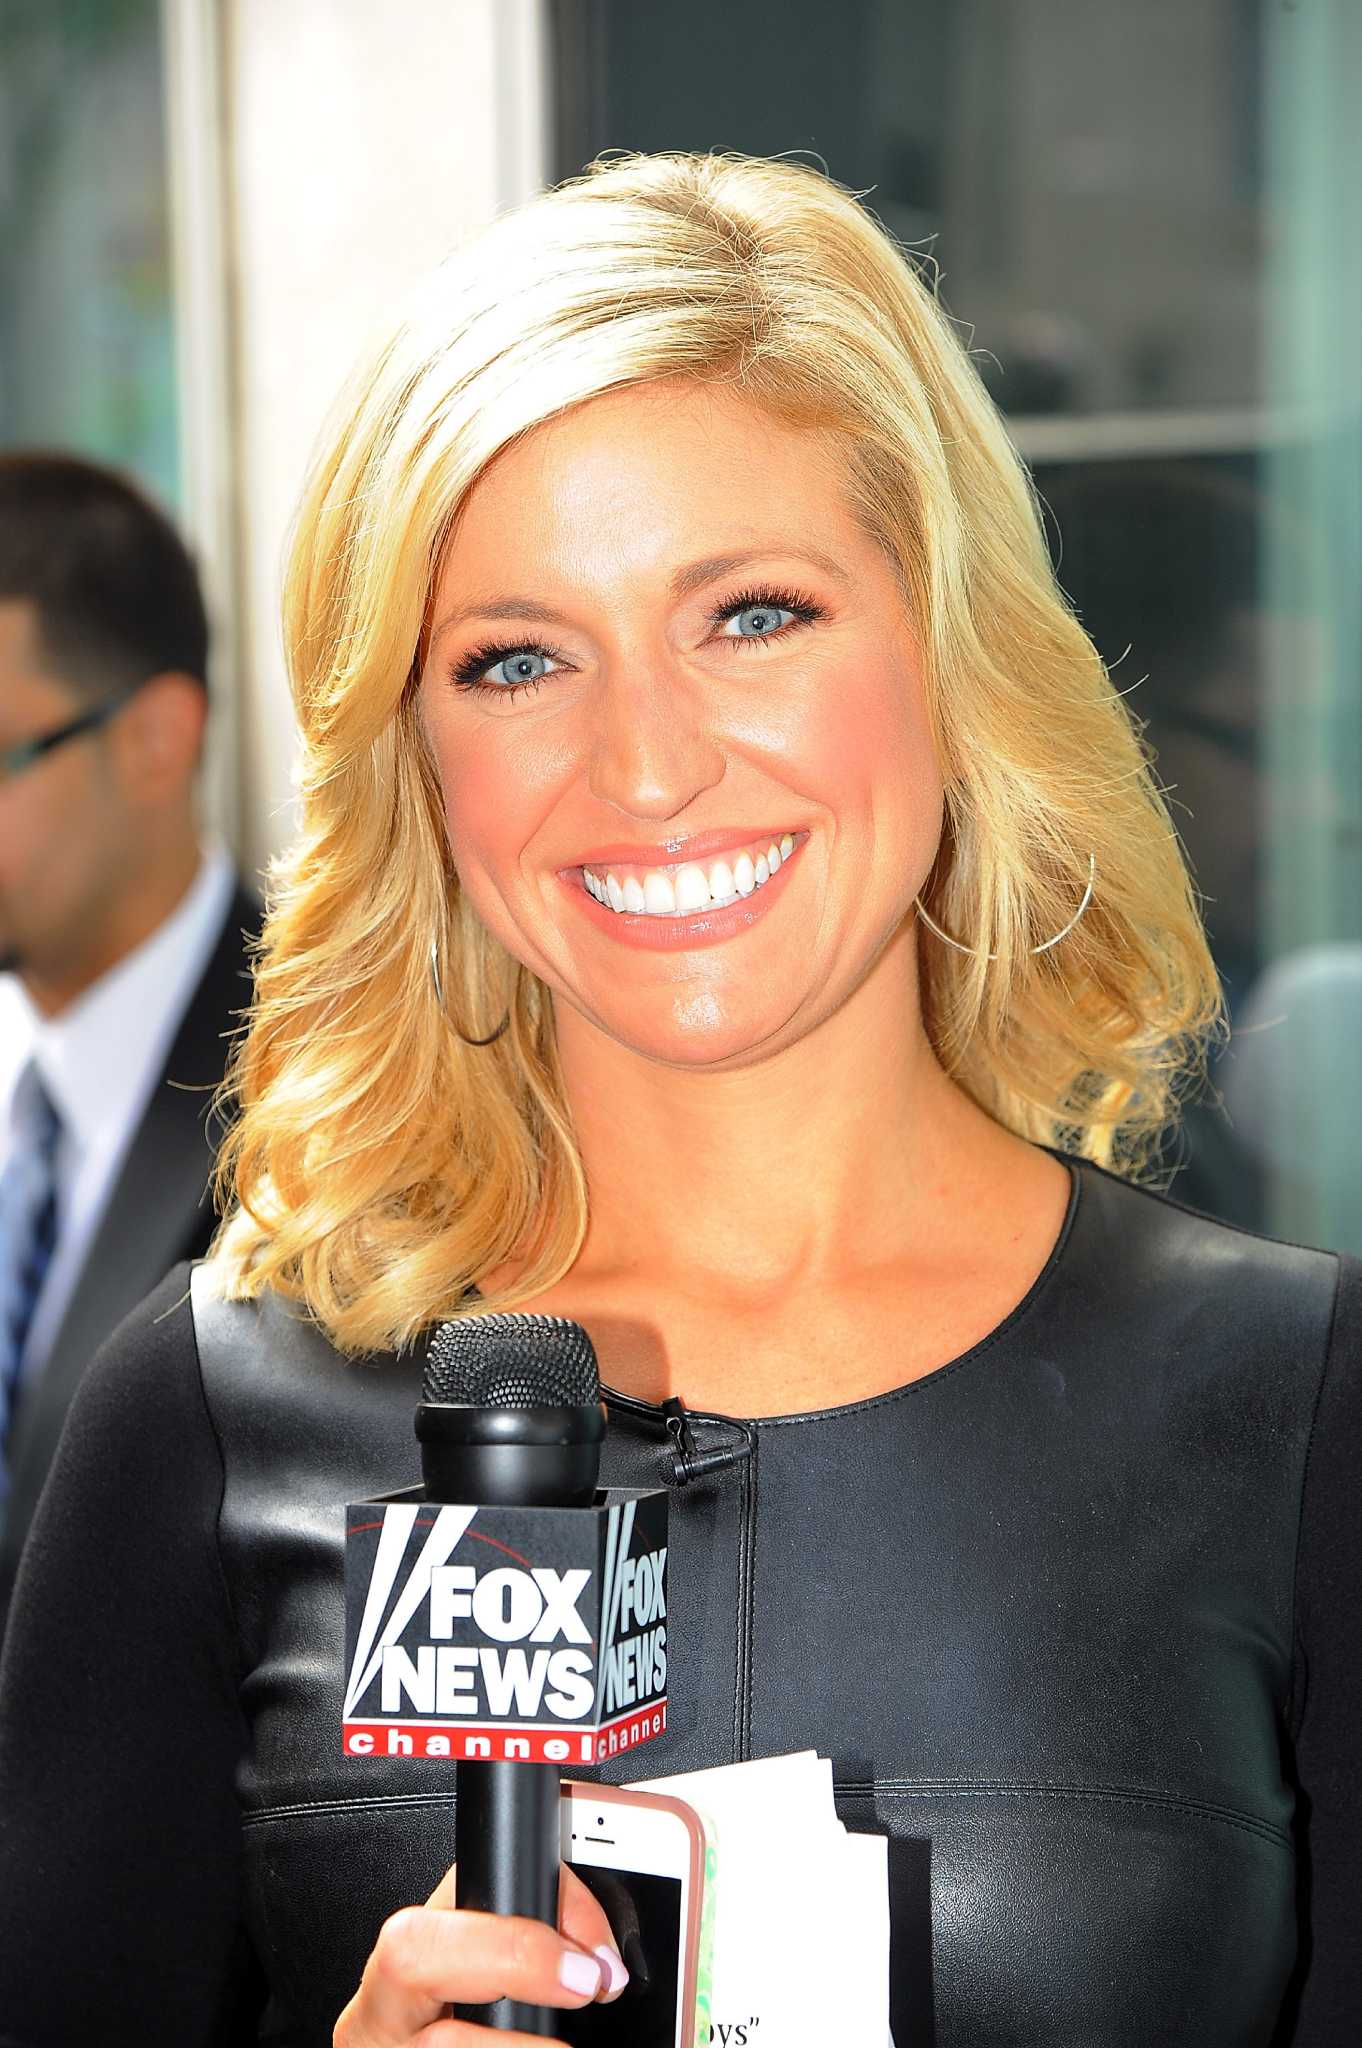 Former San Antonio anchor named 'Fox & Friends' co-host